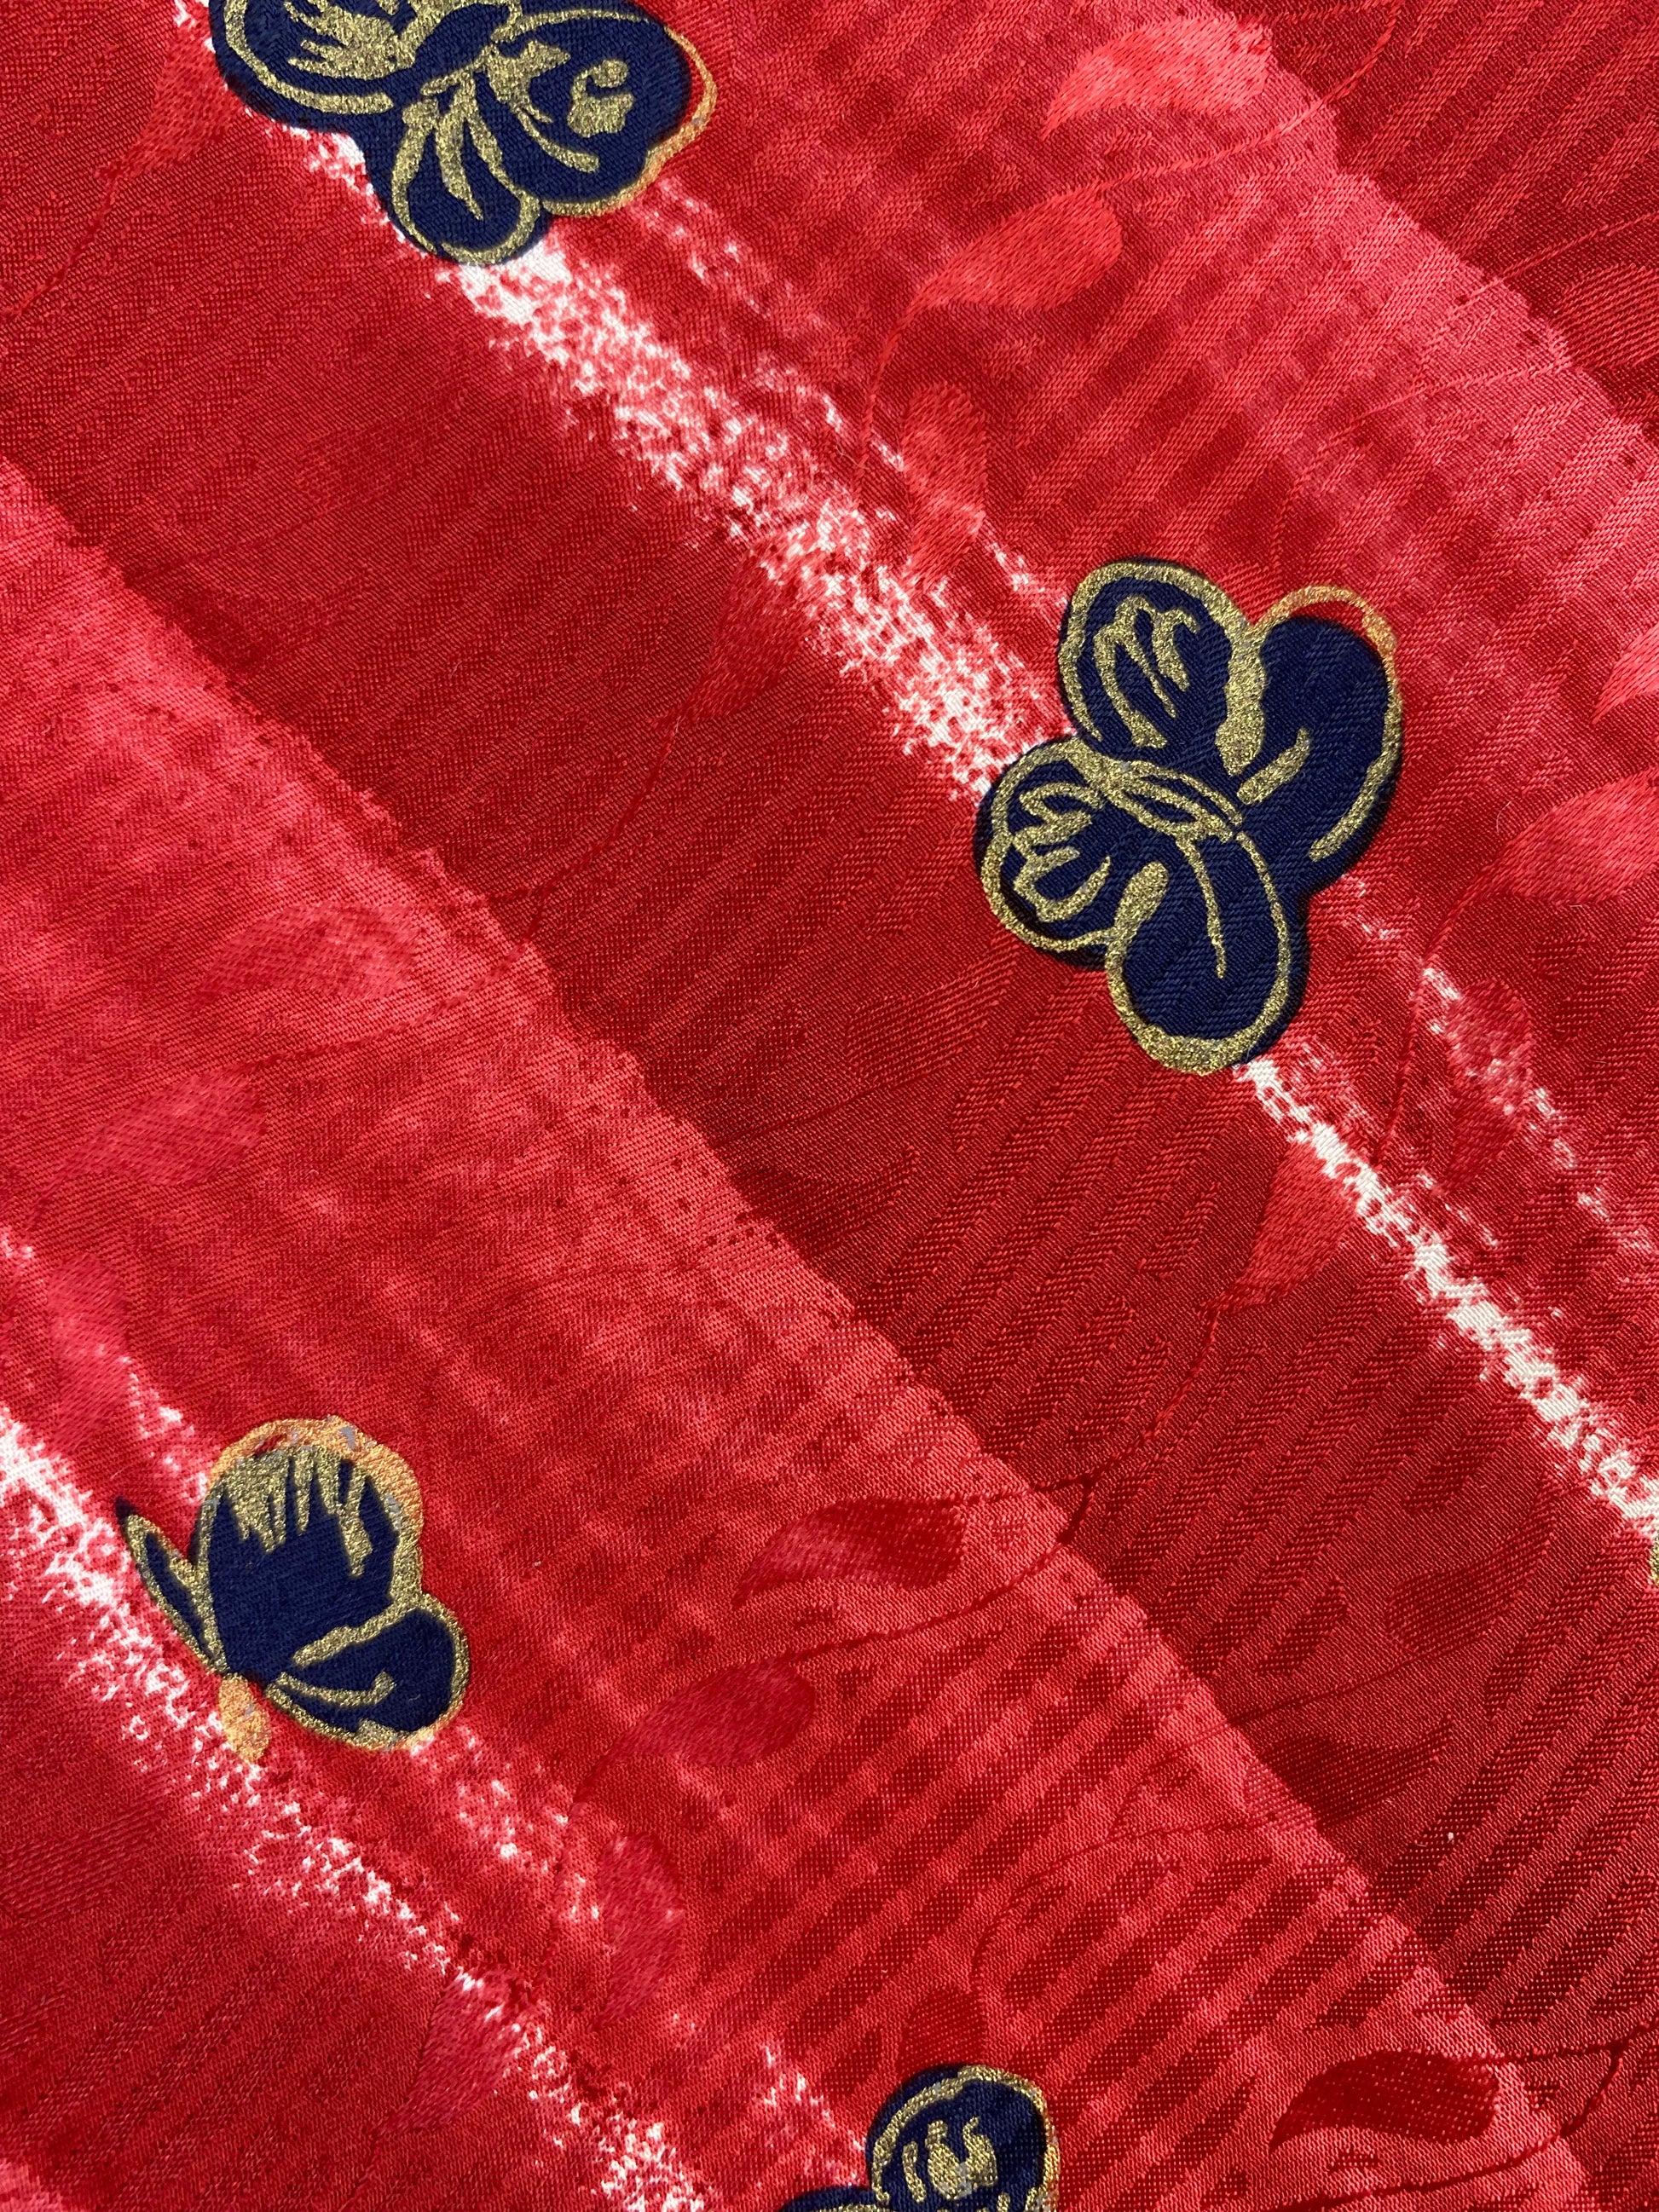 Close-up of: 90s Deadstock Silk Necktie, Men's Vintage Red/ Navy Butterfly Pattern Tie, NOS